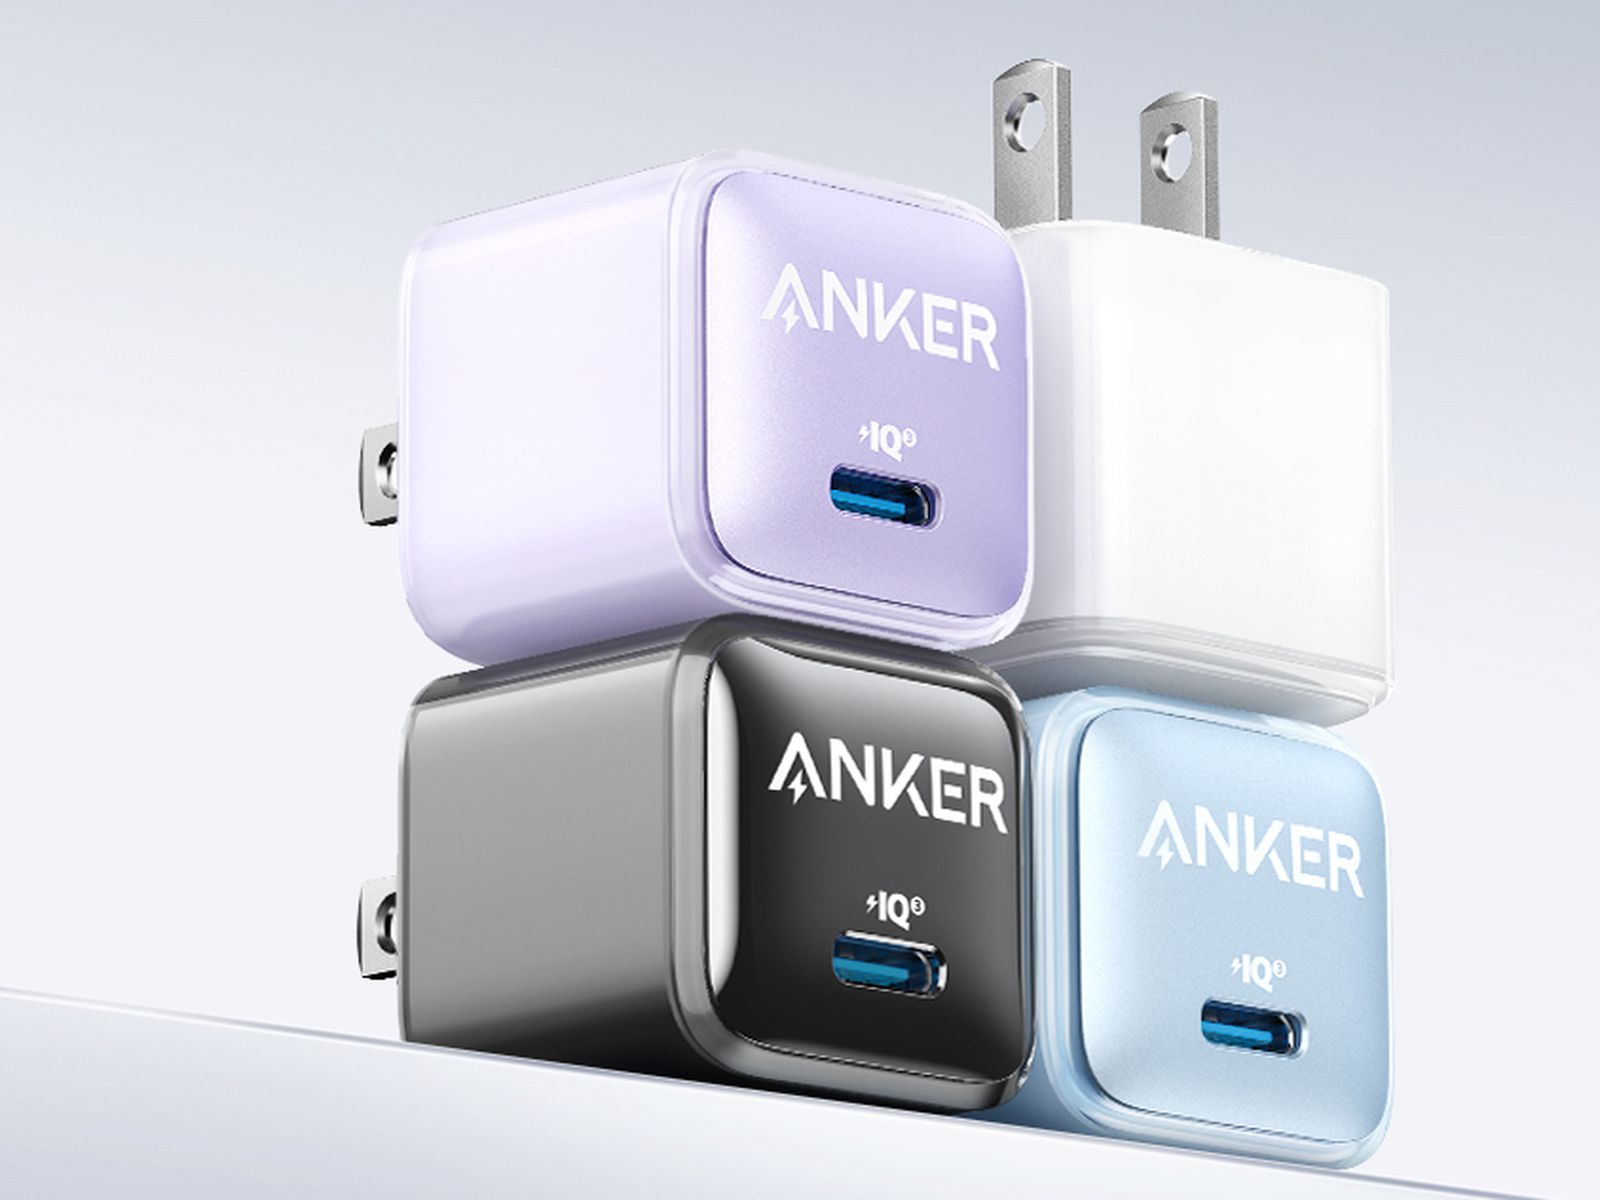 Review: Anker Nano Pro (40W) - iPhone J.D.